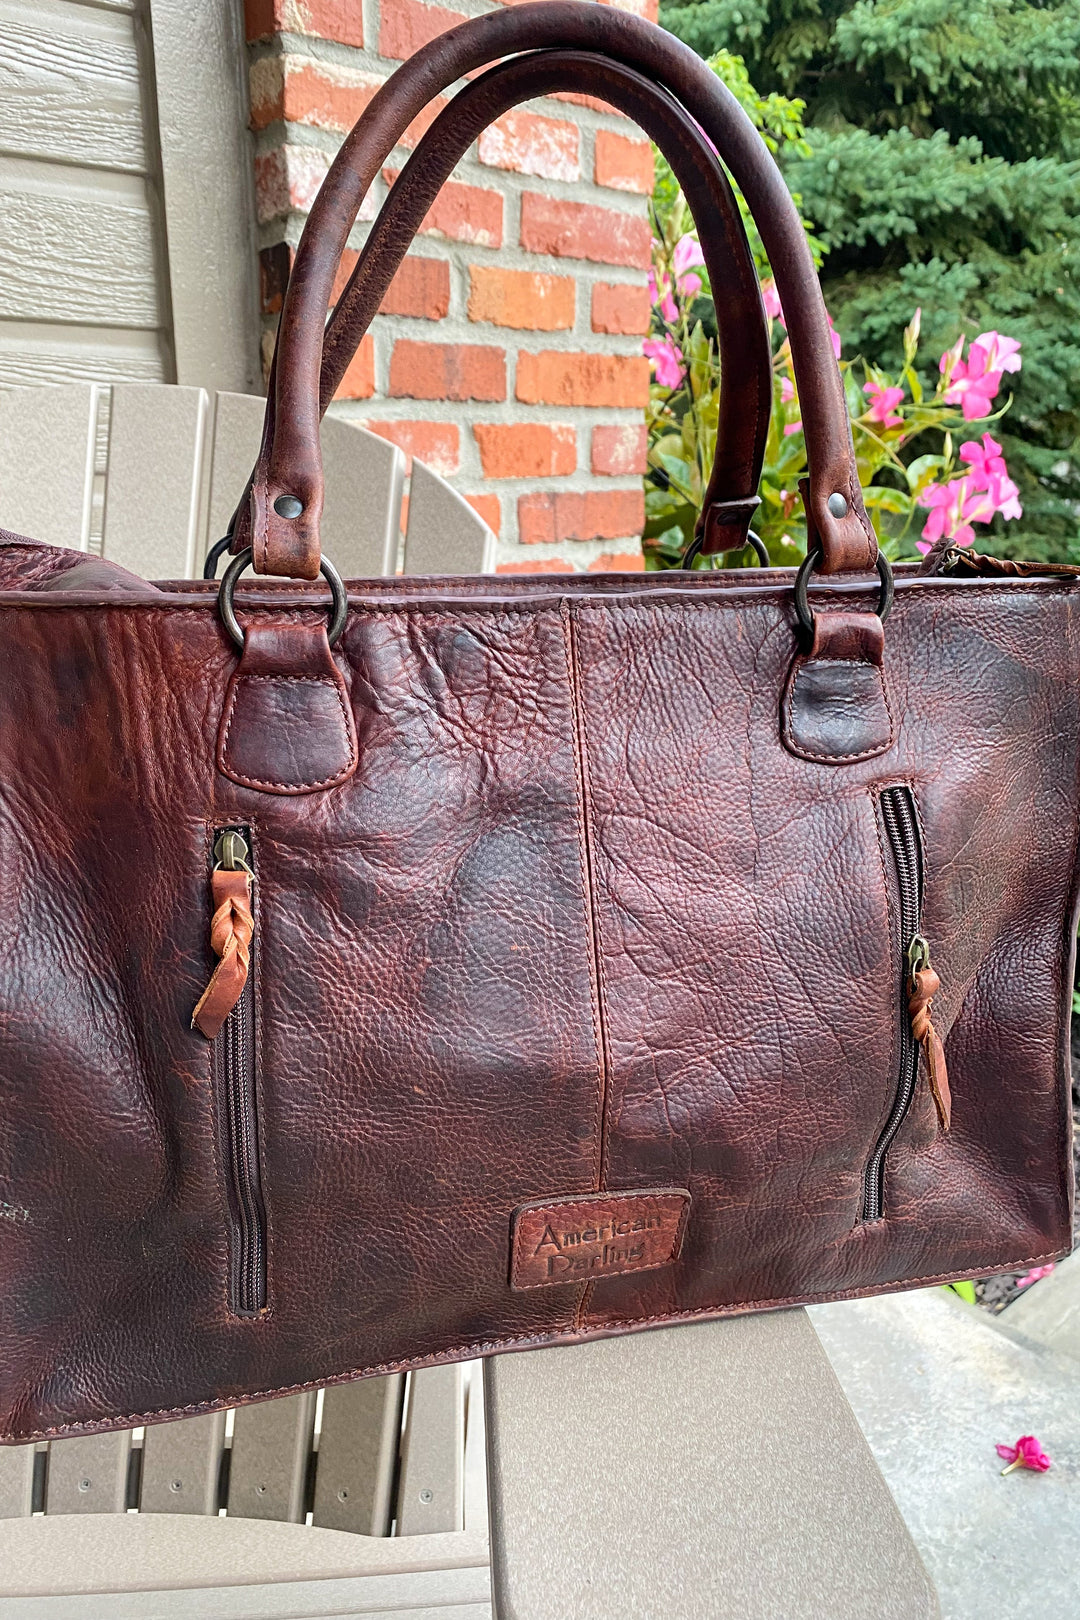 Precious Trip Leather Bag - Middle West Apparel